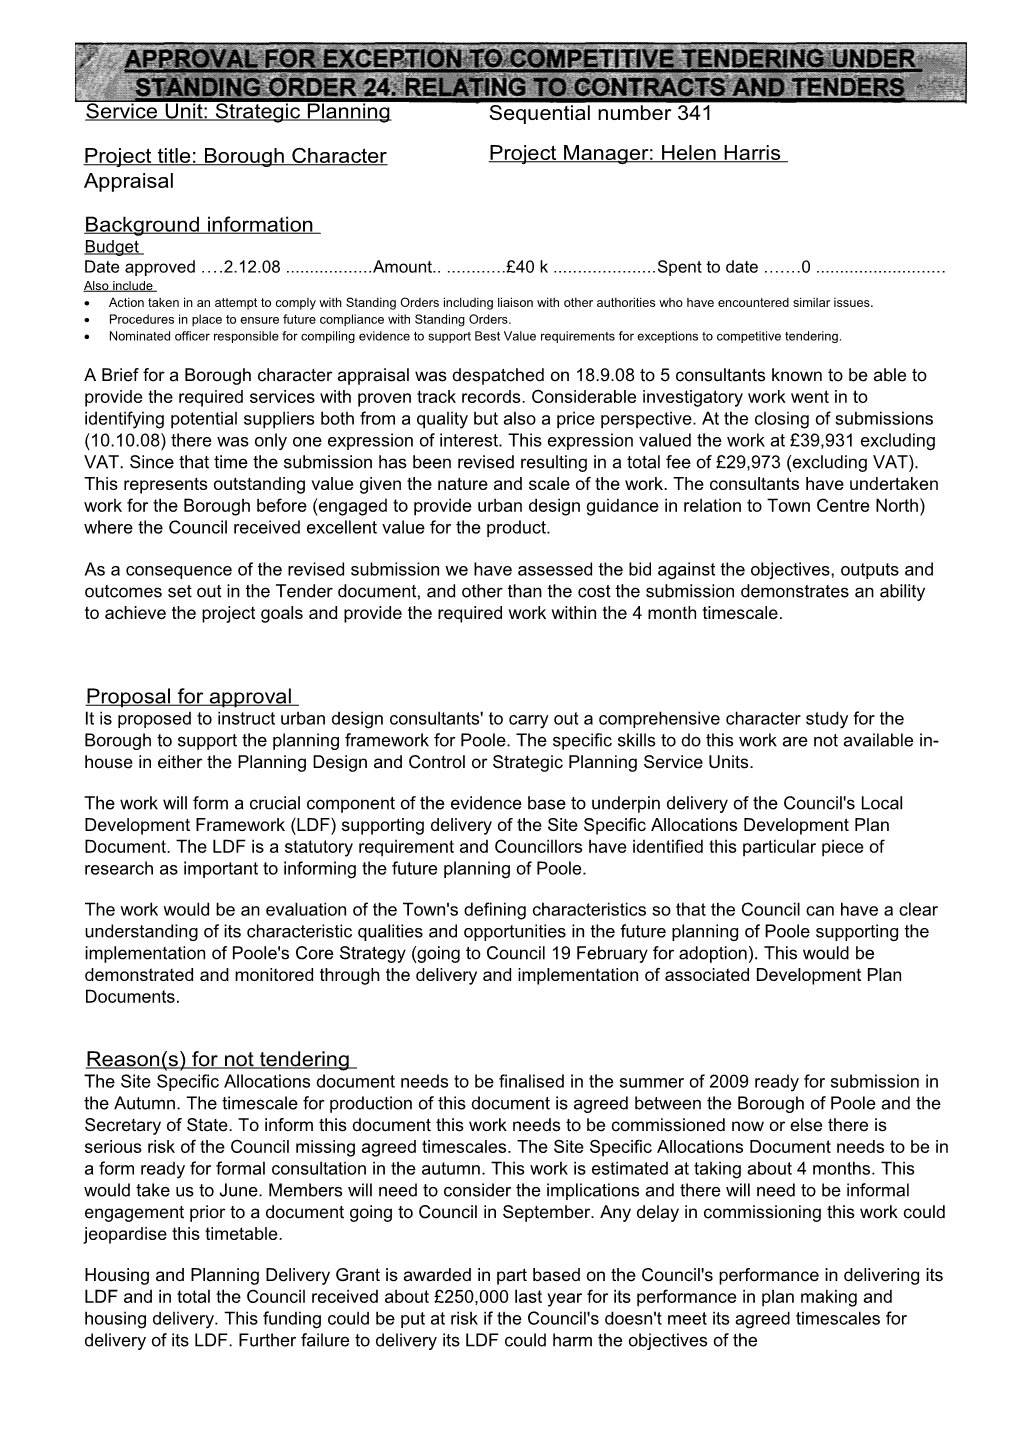 PFD Cllr Parker - 27022009 - Borough Character Appraisal - Report